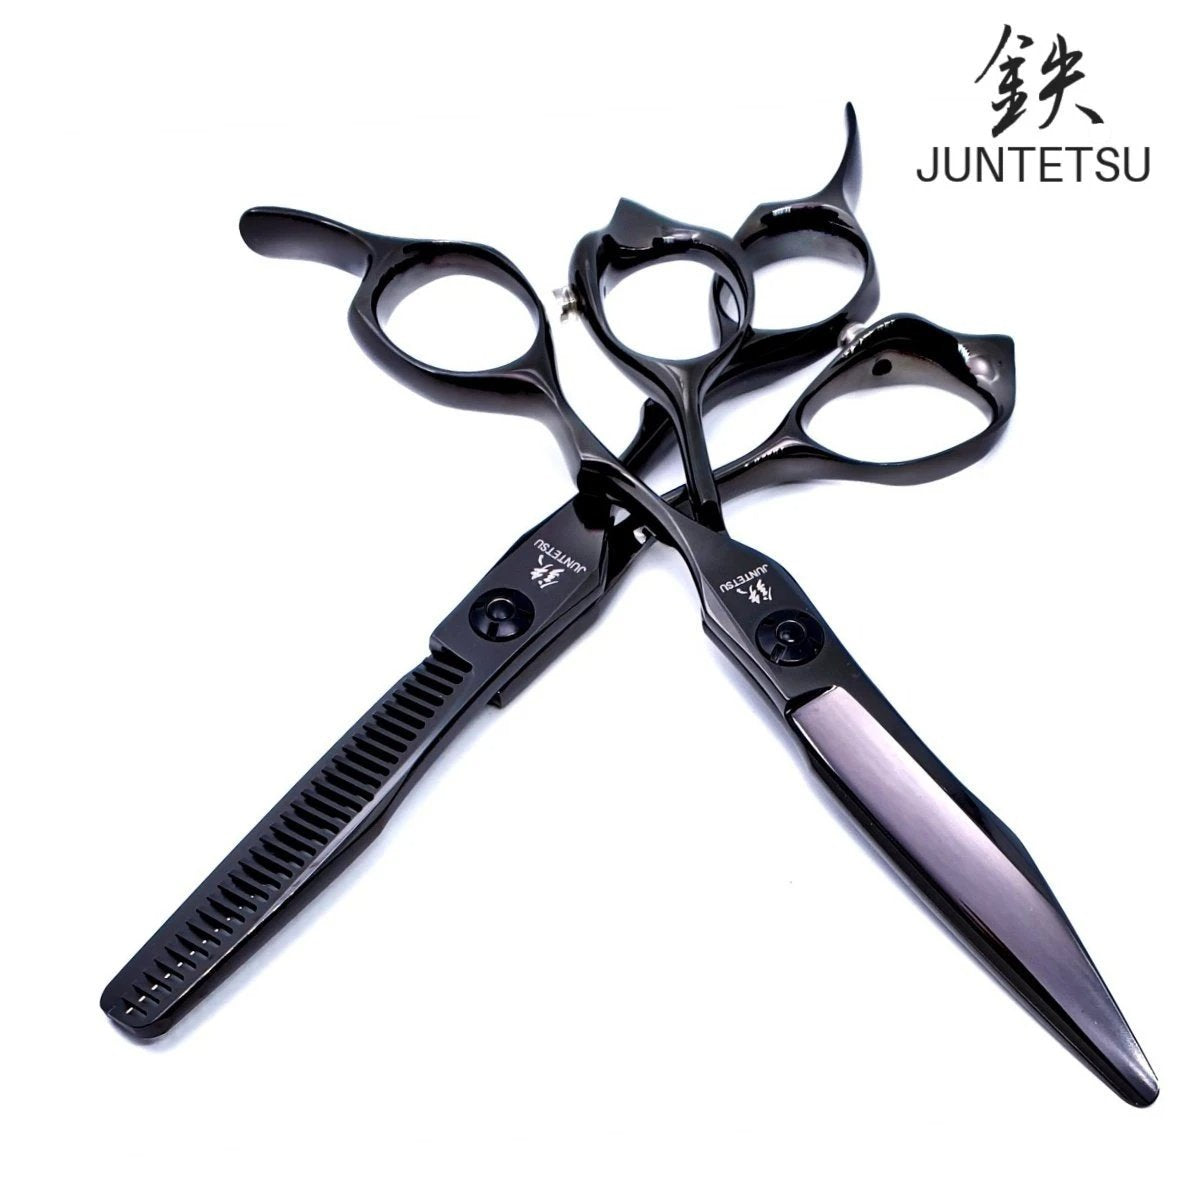 Juntetsu Night Cutting & Thinning Scissors Set - Japan Scissors